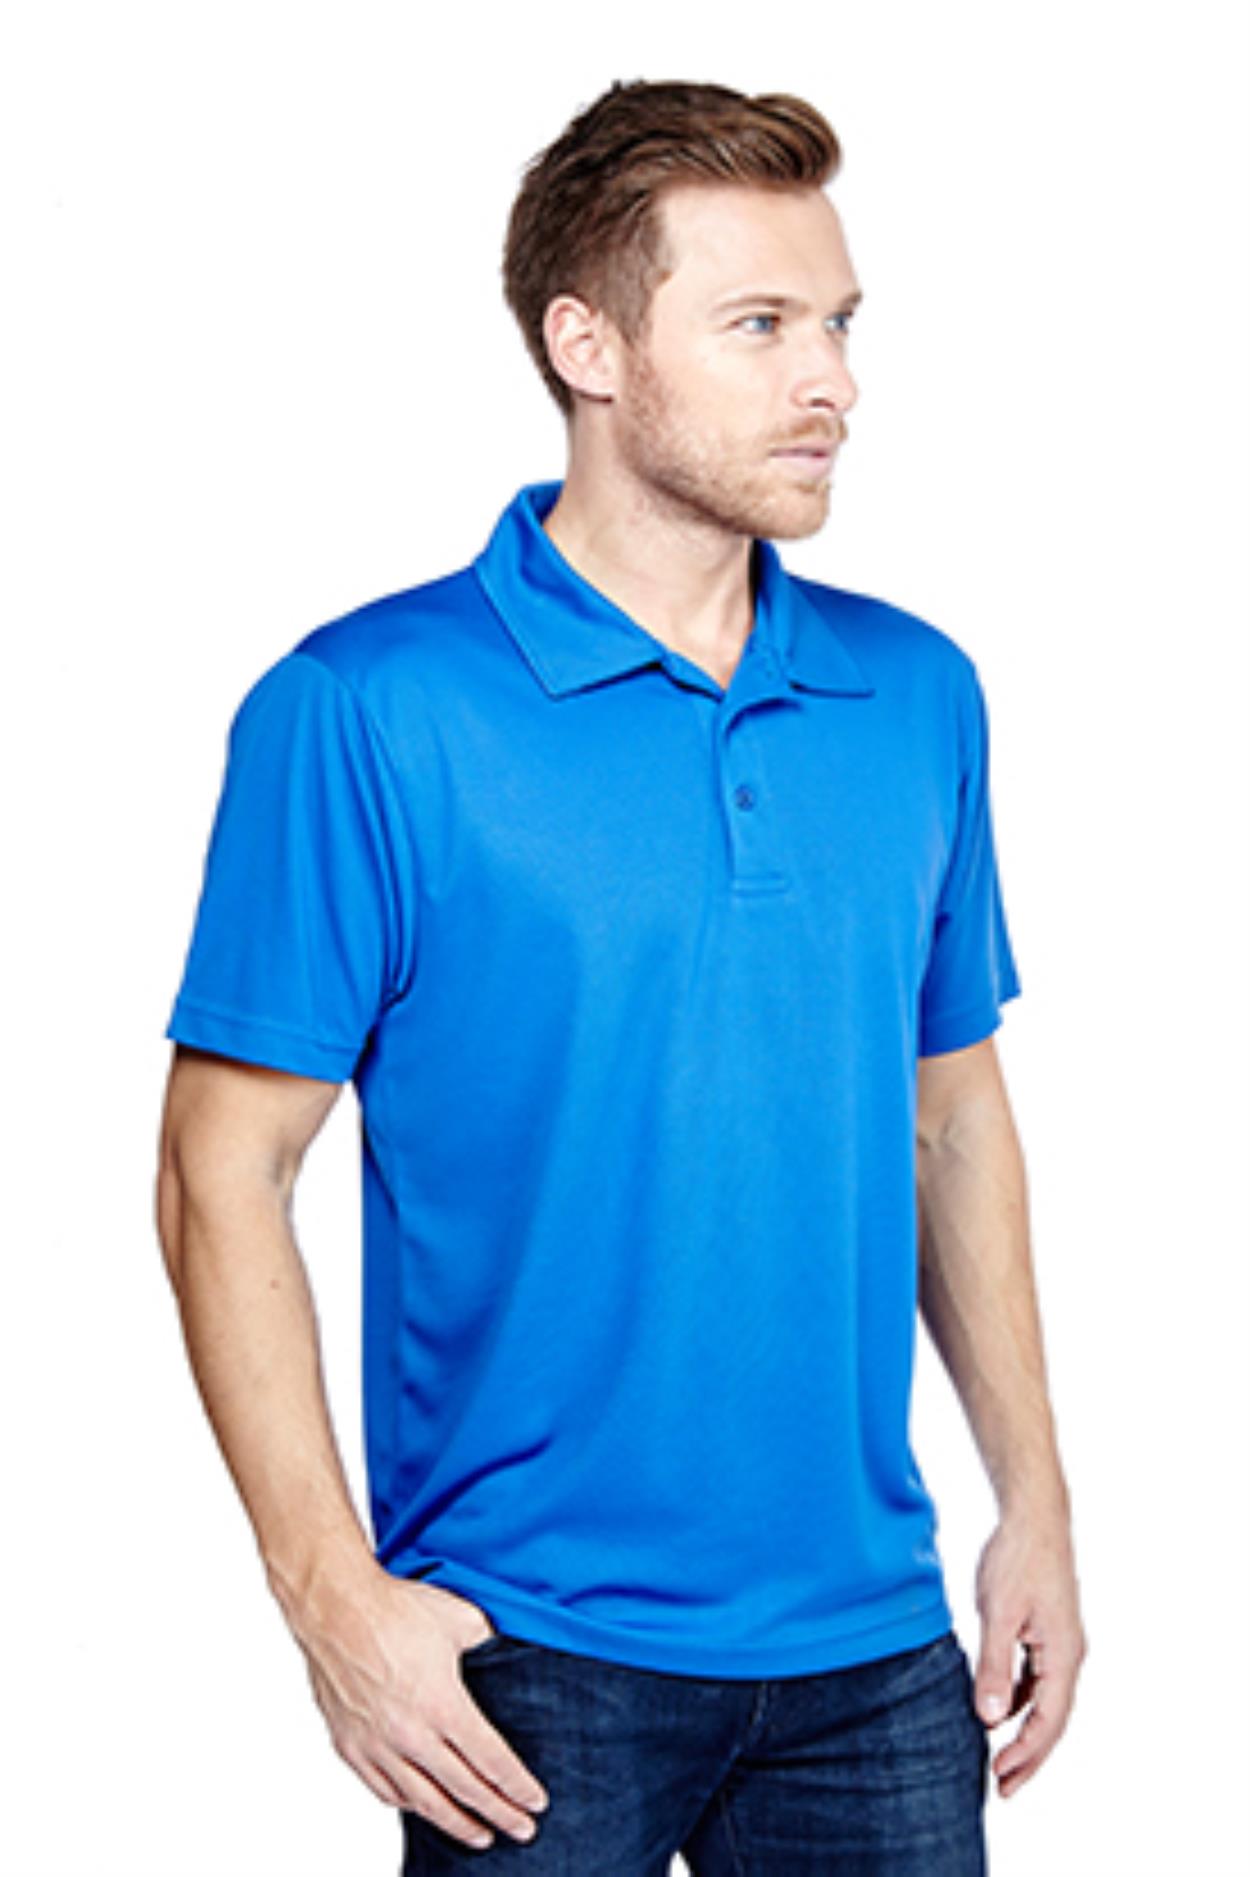 UC125 Sports Polo Shirt Image 1